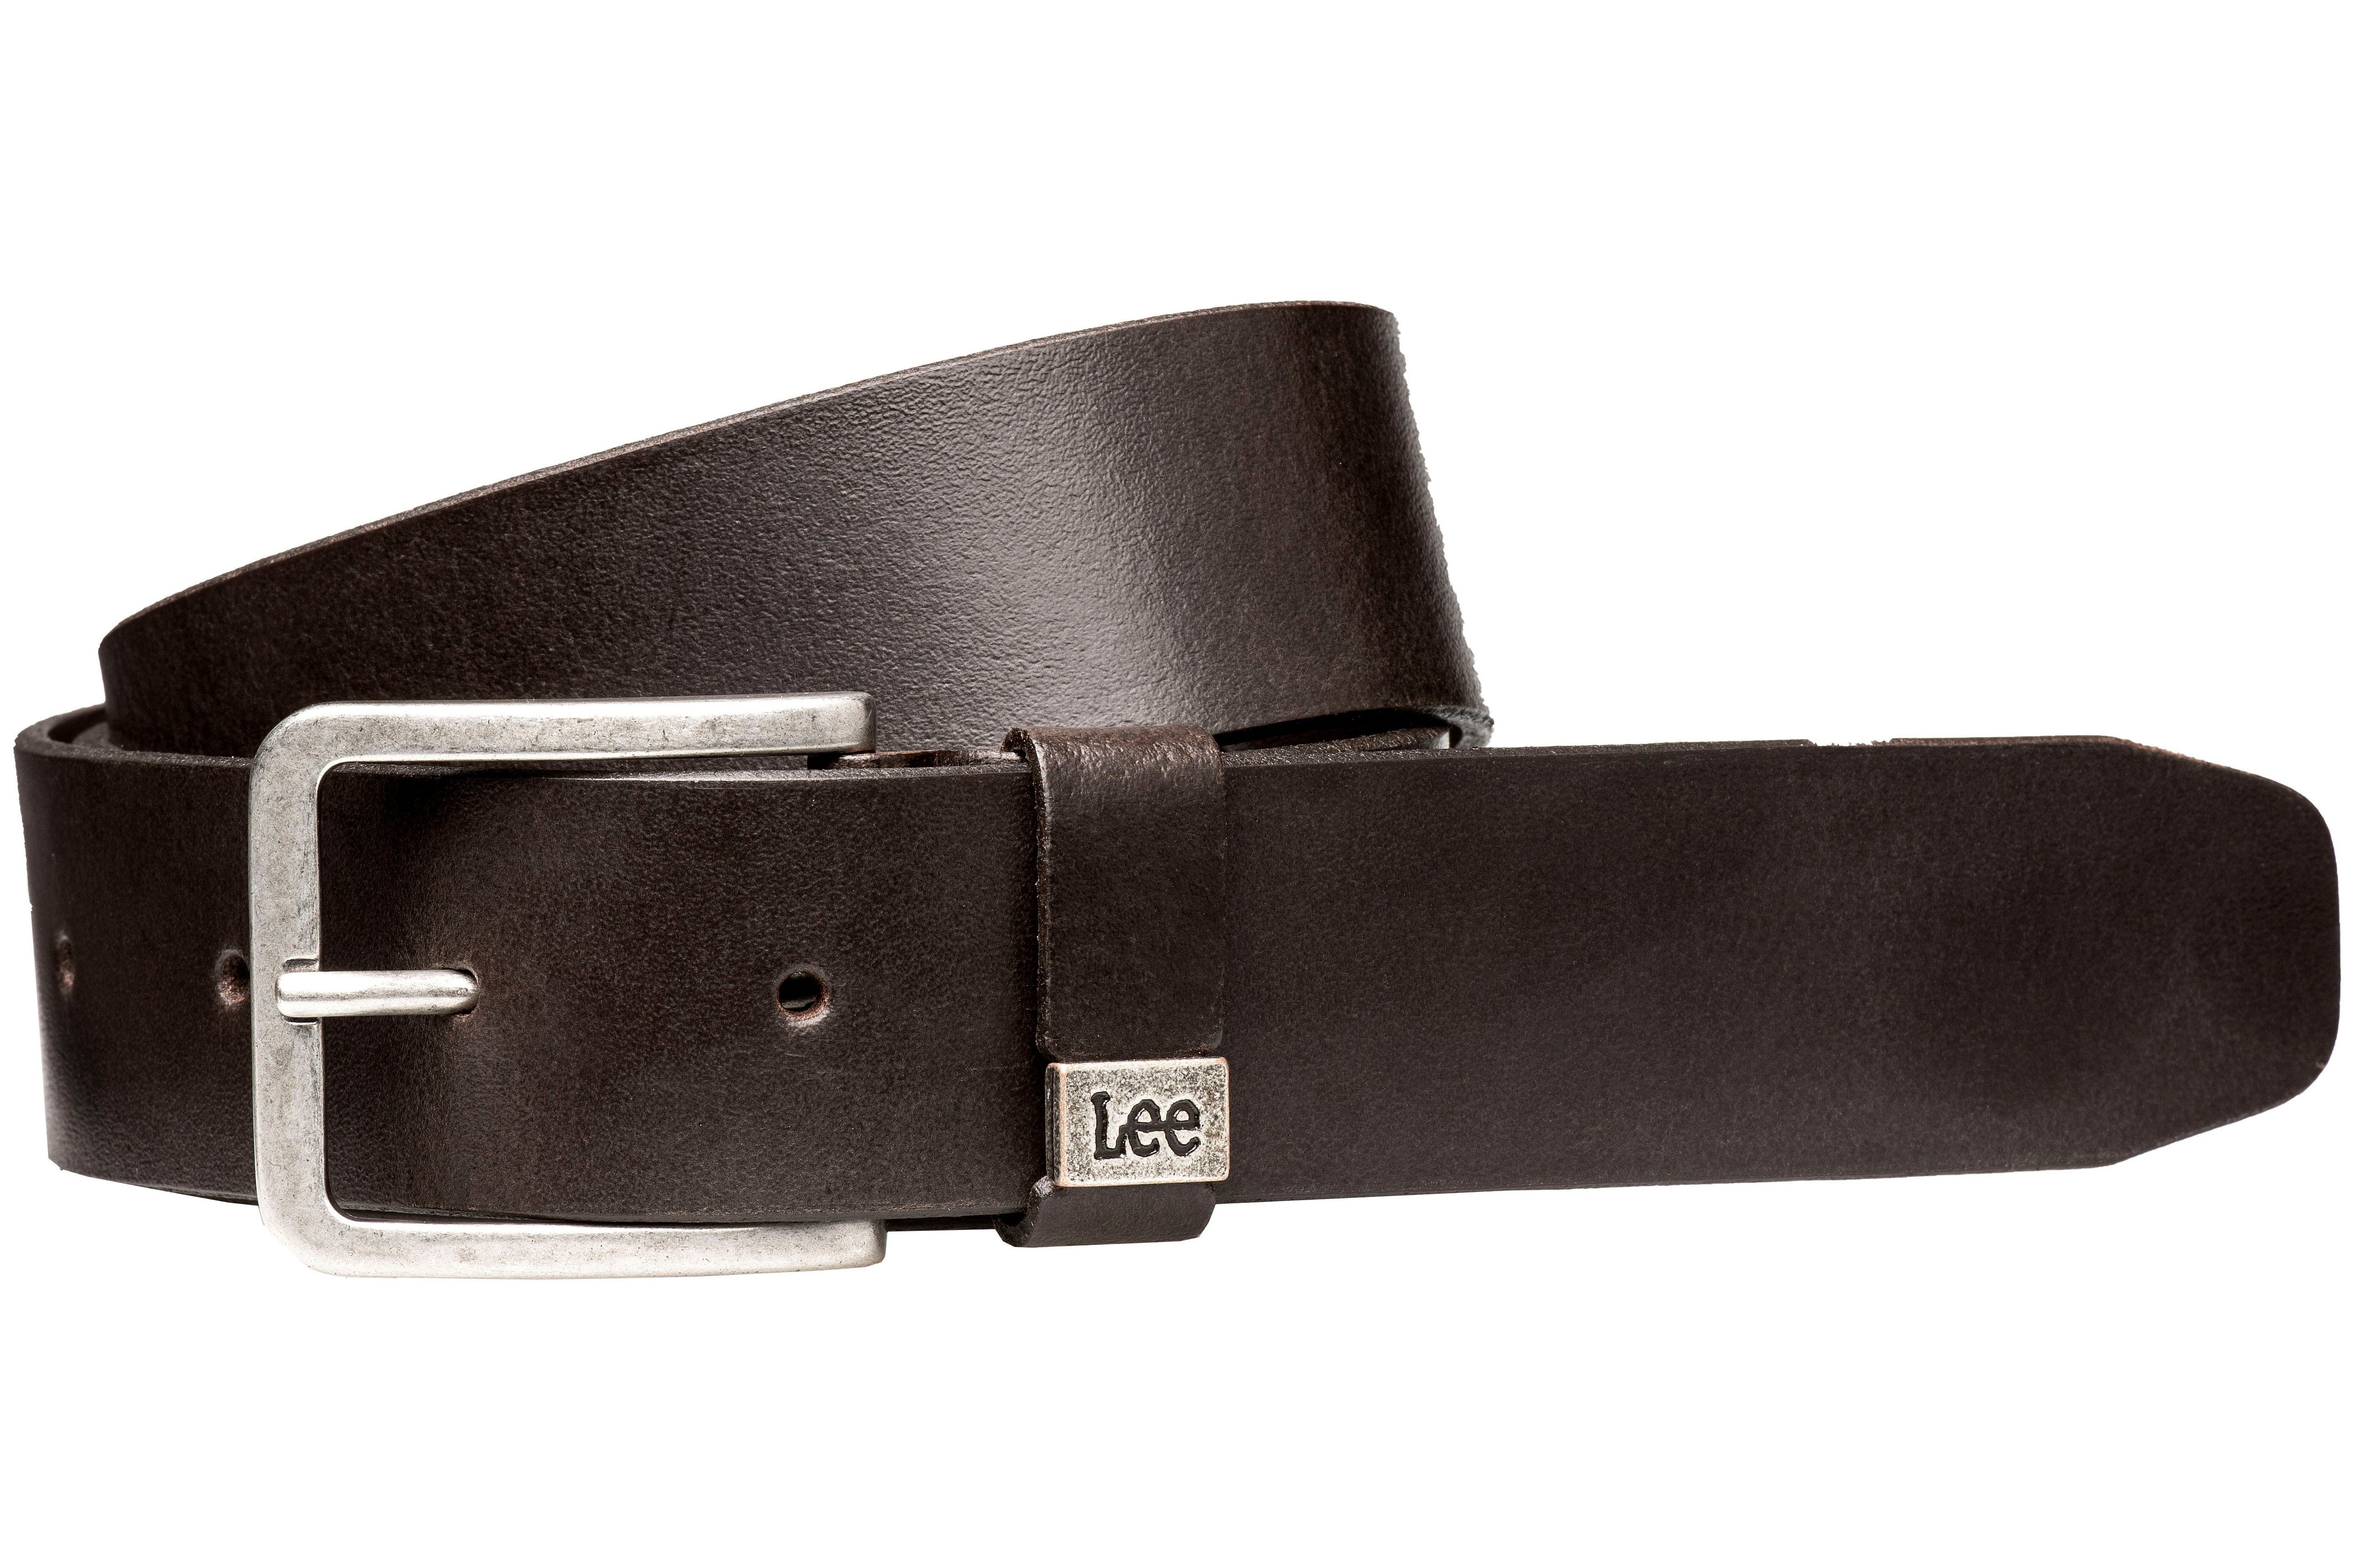 LOGO Lee® SMALL brown dark Ledergürtel